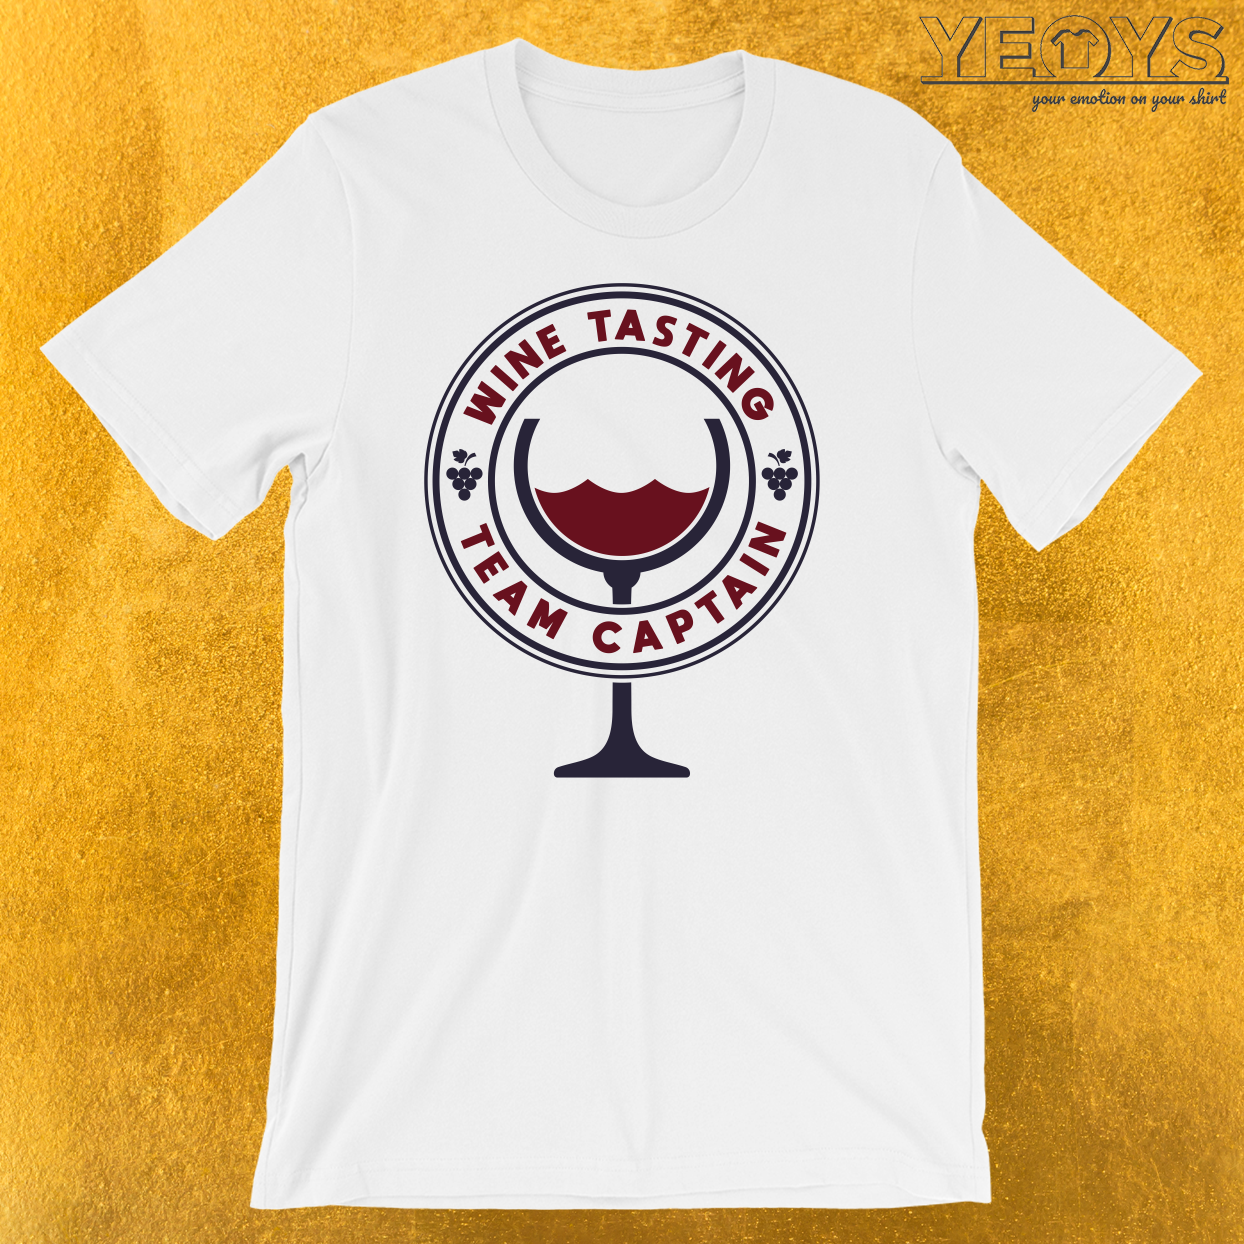 Wine Tasting Team Captain T-Shirt